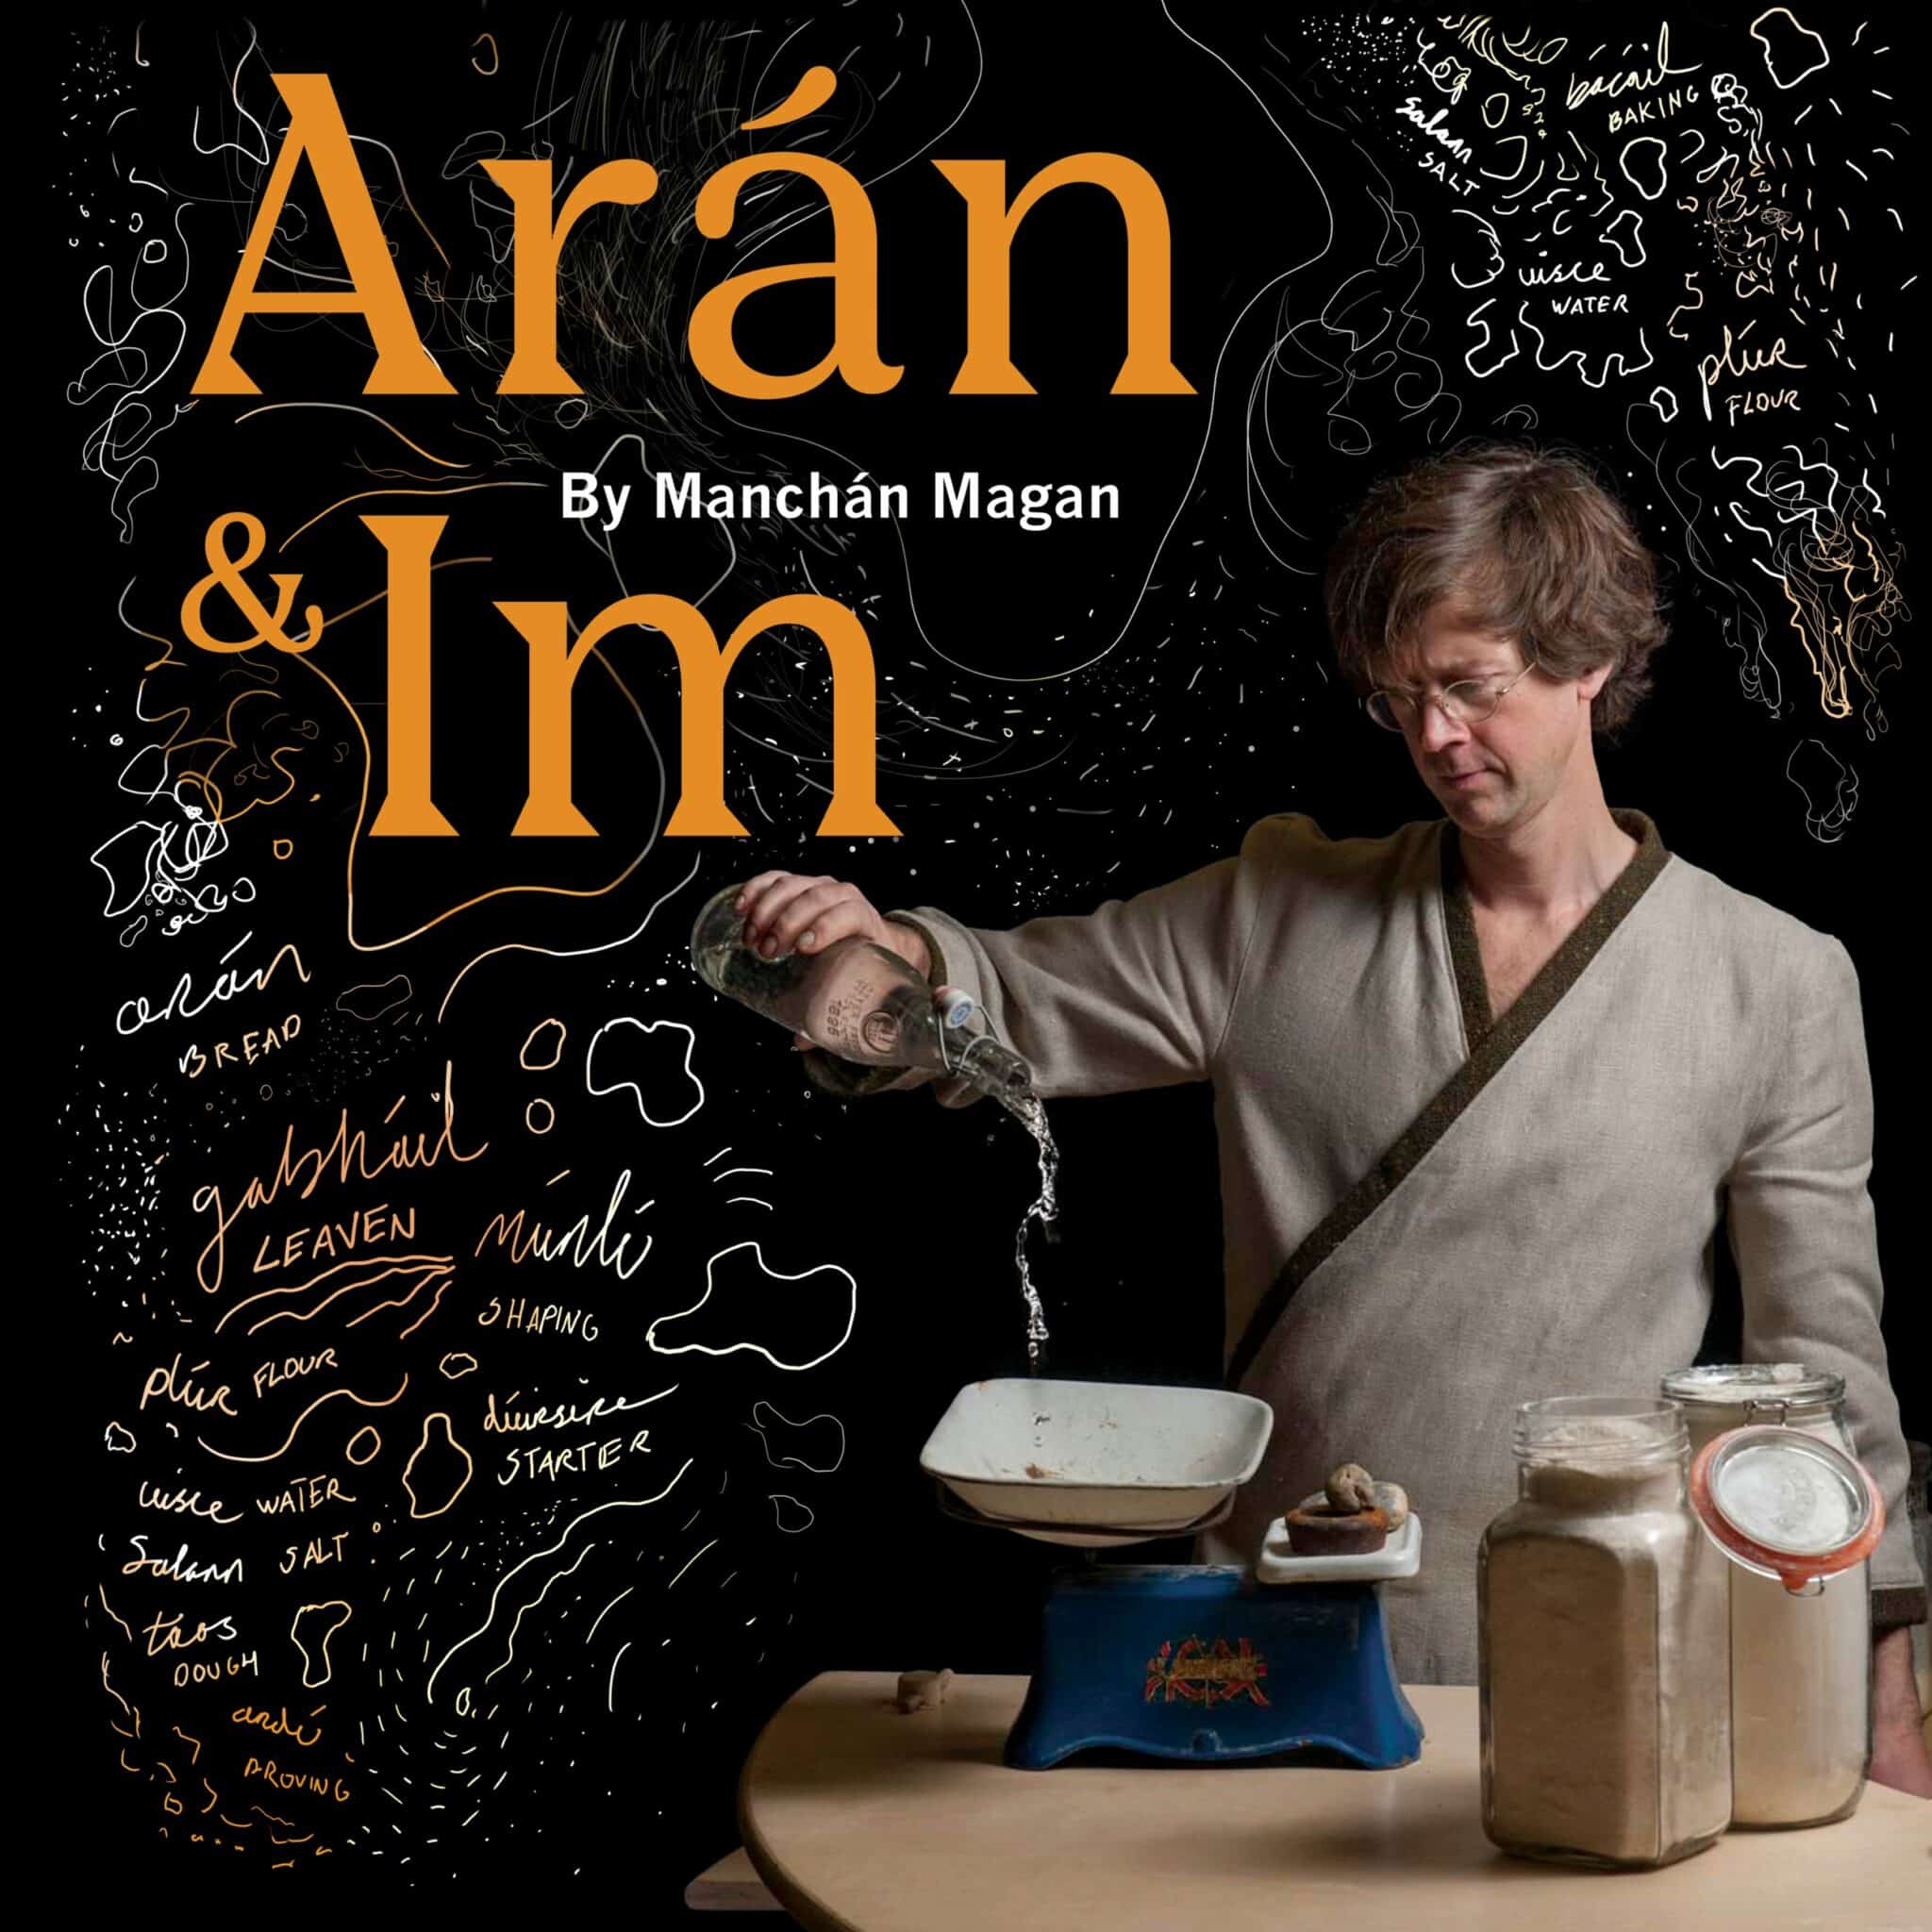 Promo image of Magan baking bread